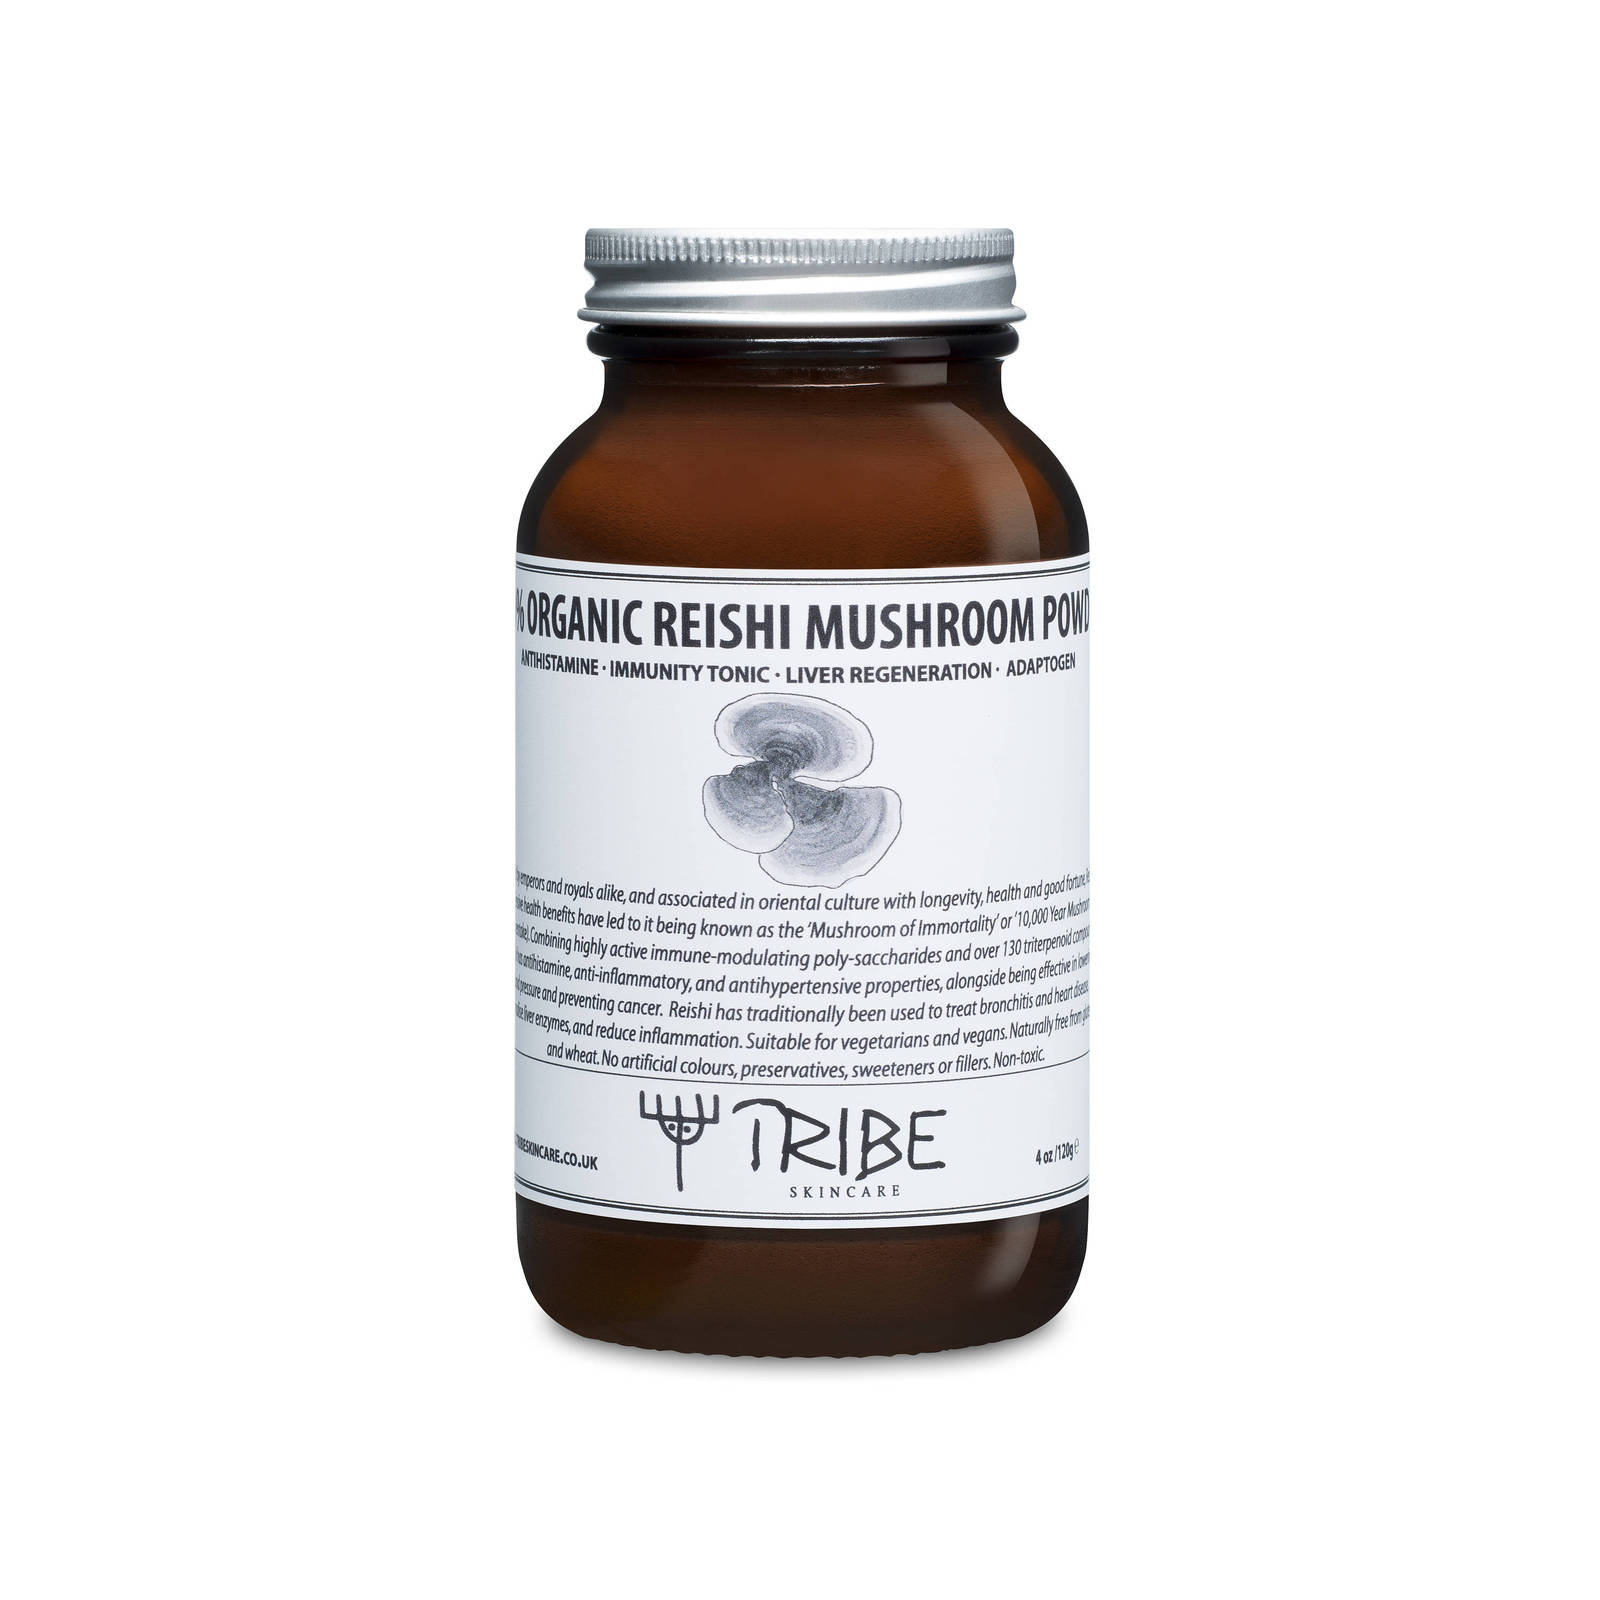 Tribe Skincare 100% Organic Reishi Mushroom Powder